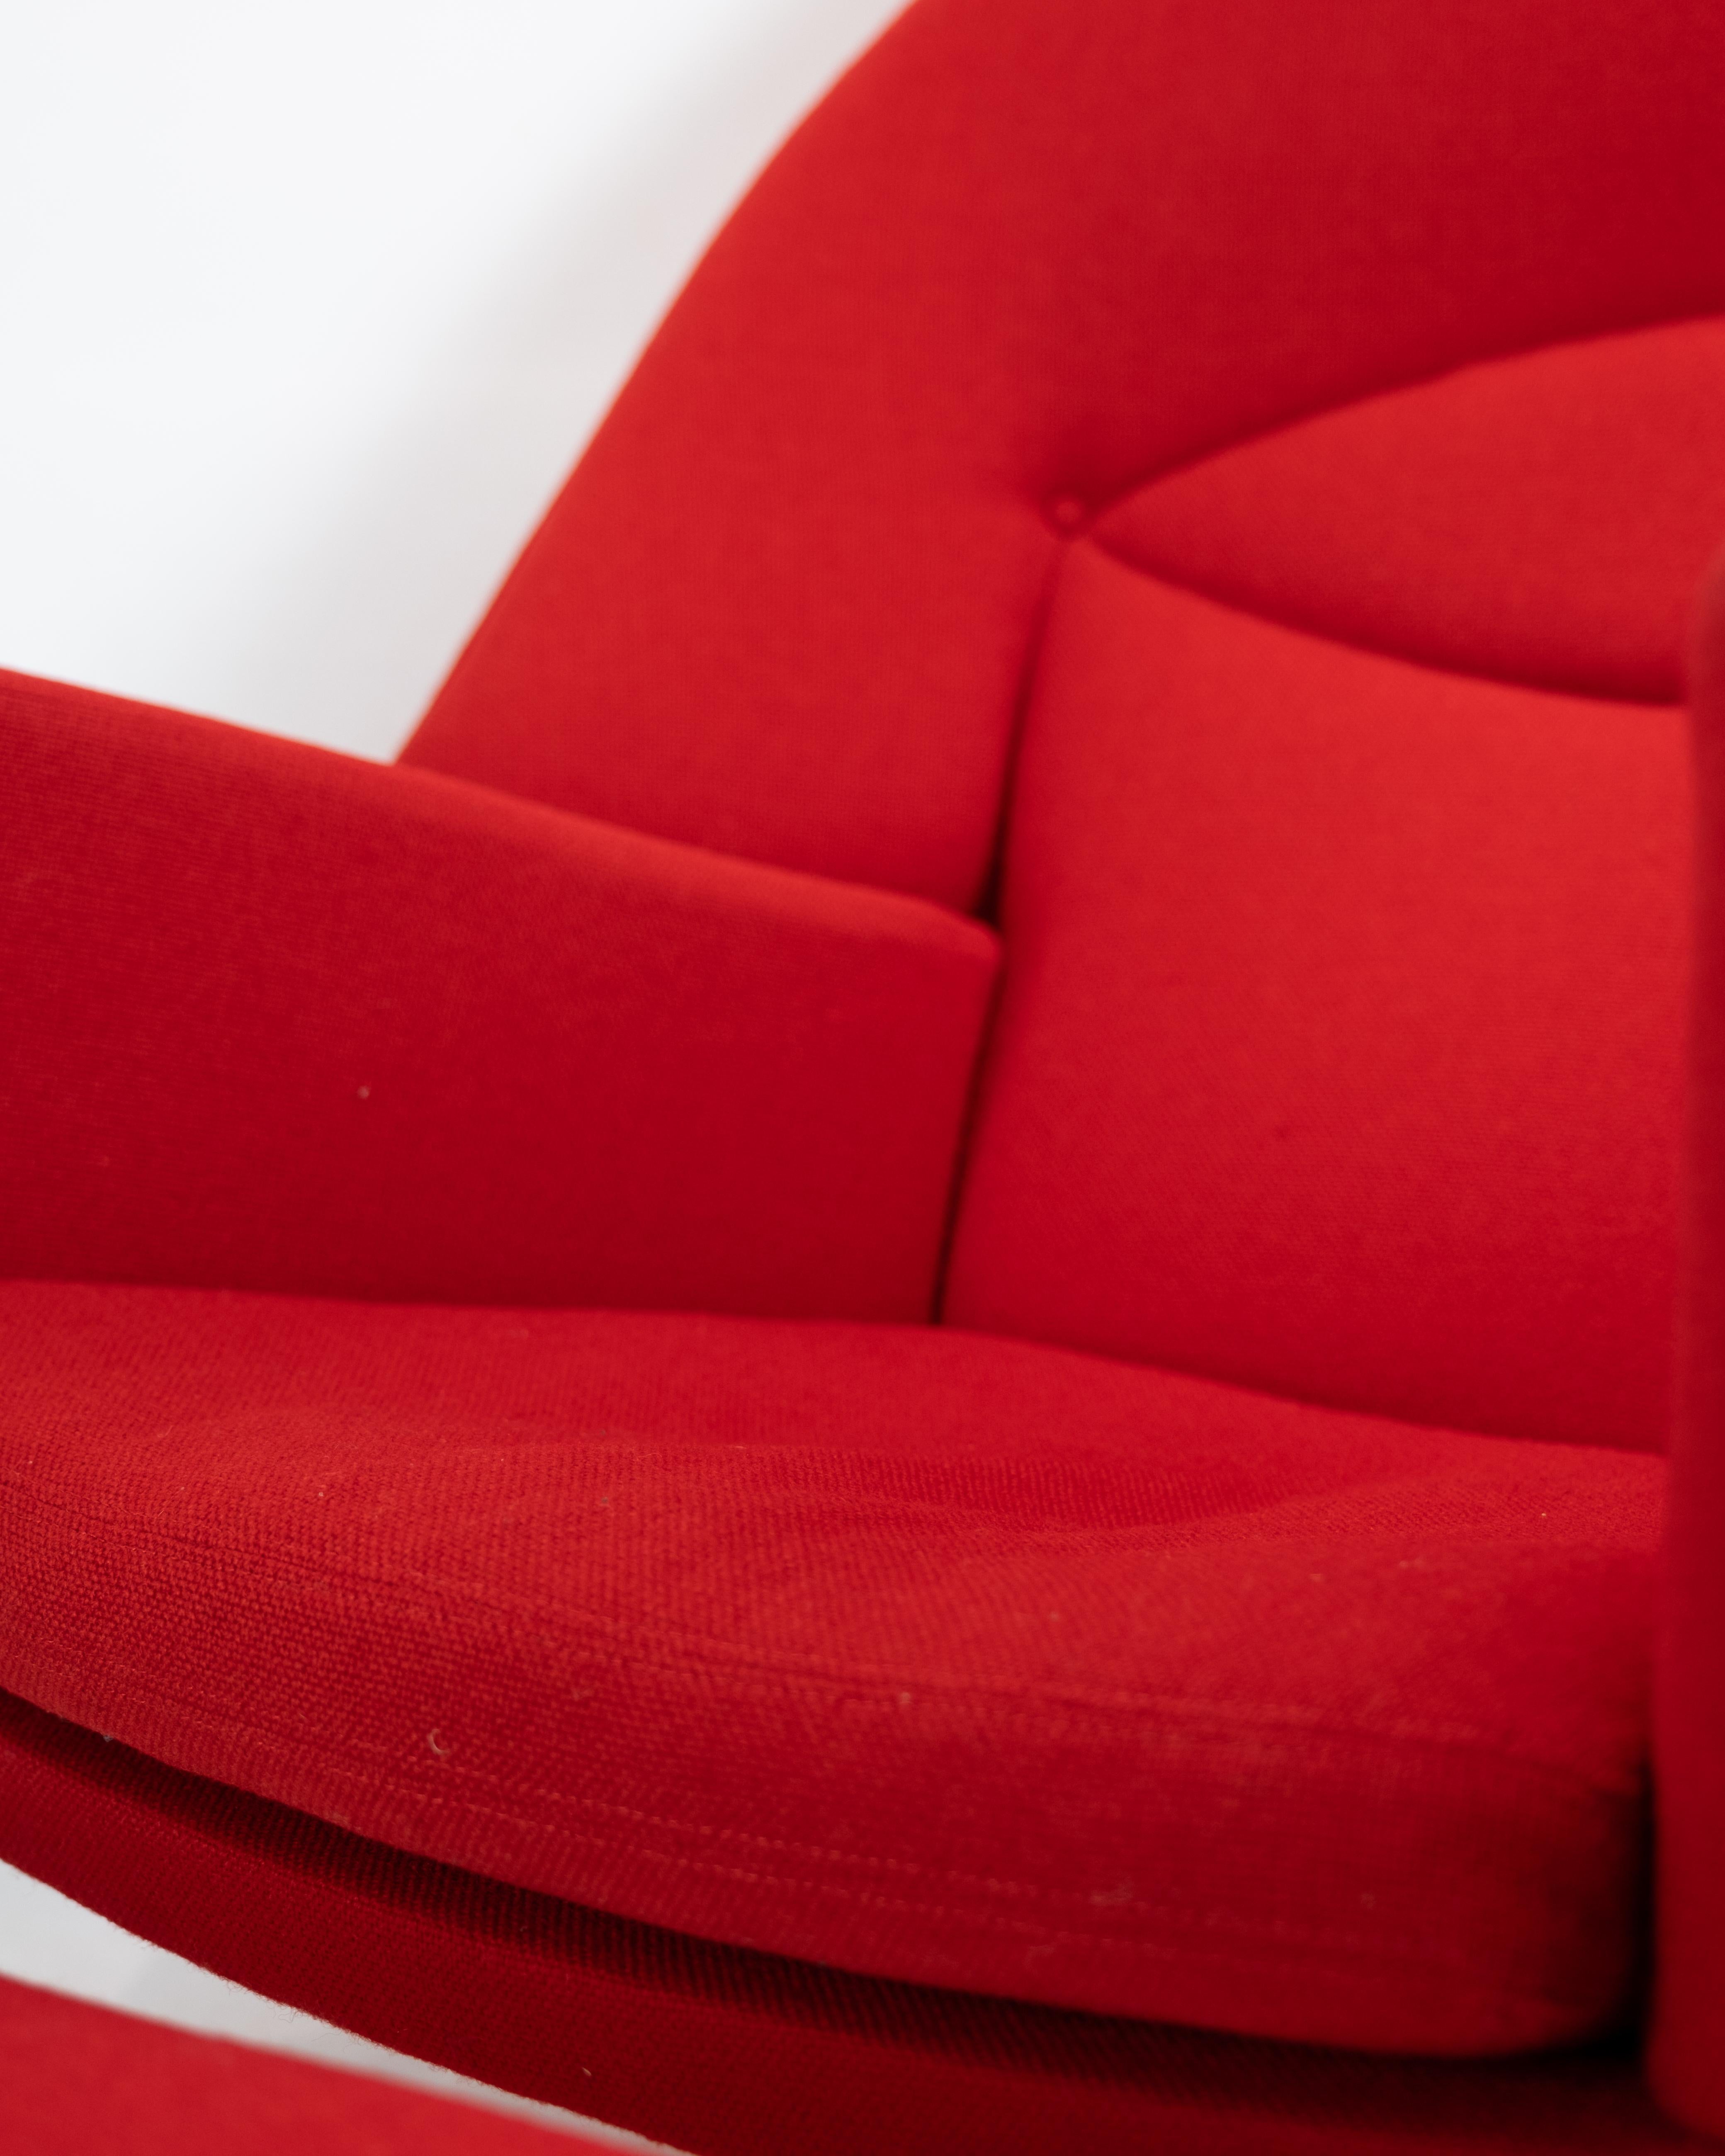 Scandinavian Modern Oculus Chair in Red Hallingdal Fabric Designed By Hans J. Wegner 